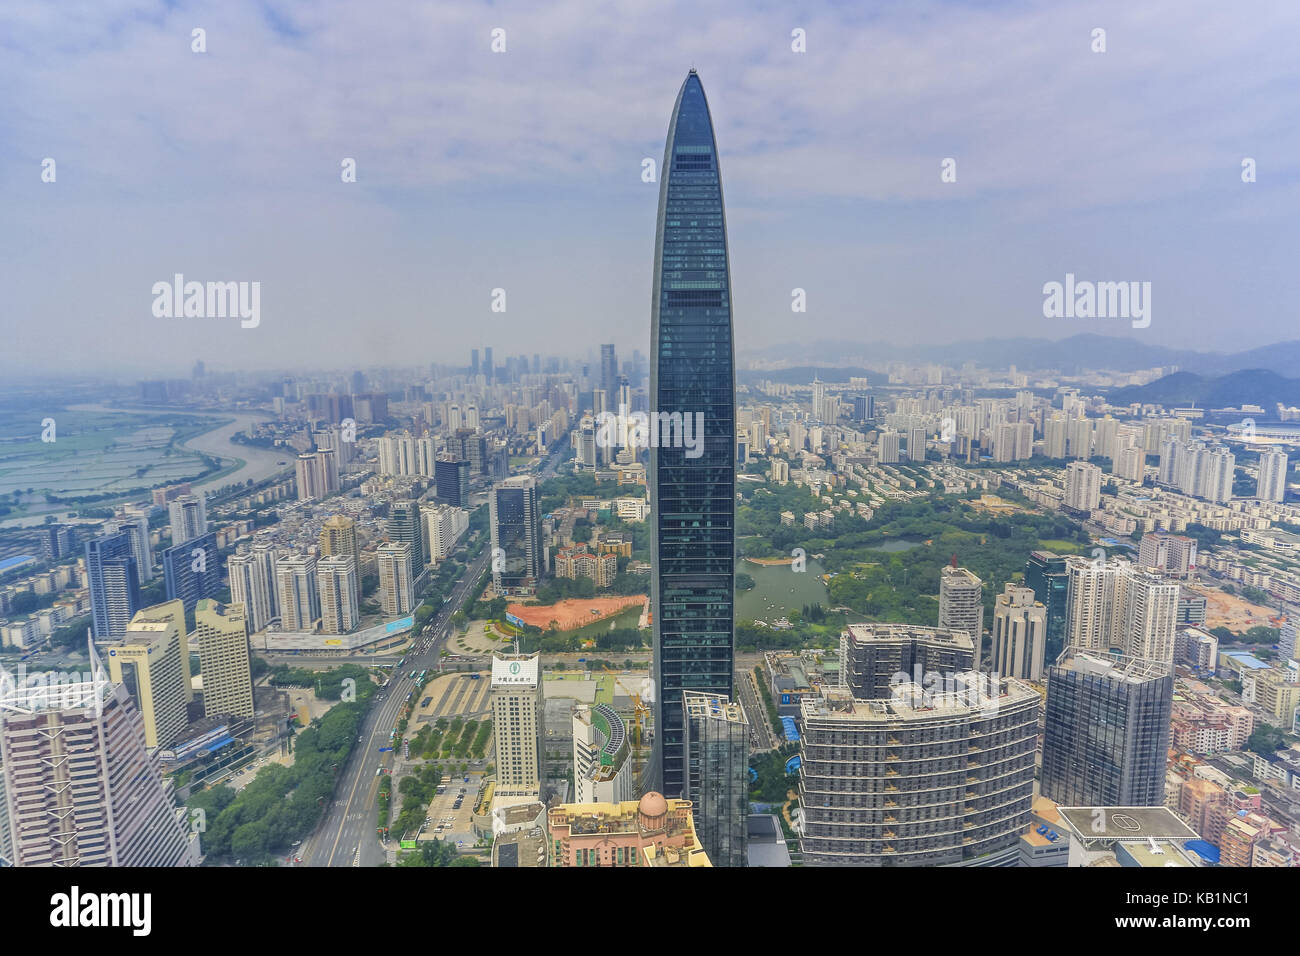 KK-100 Tower, Shenzhen, Stock Photo